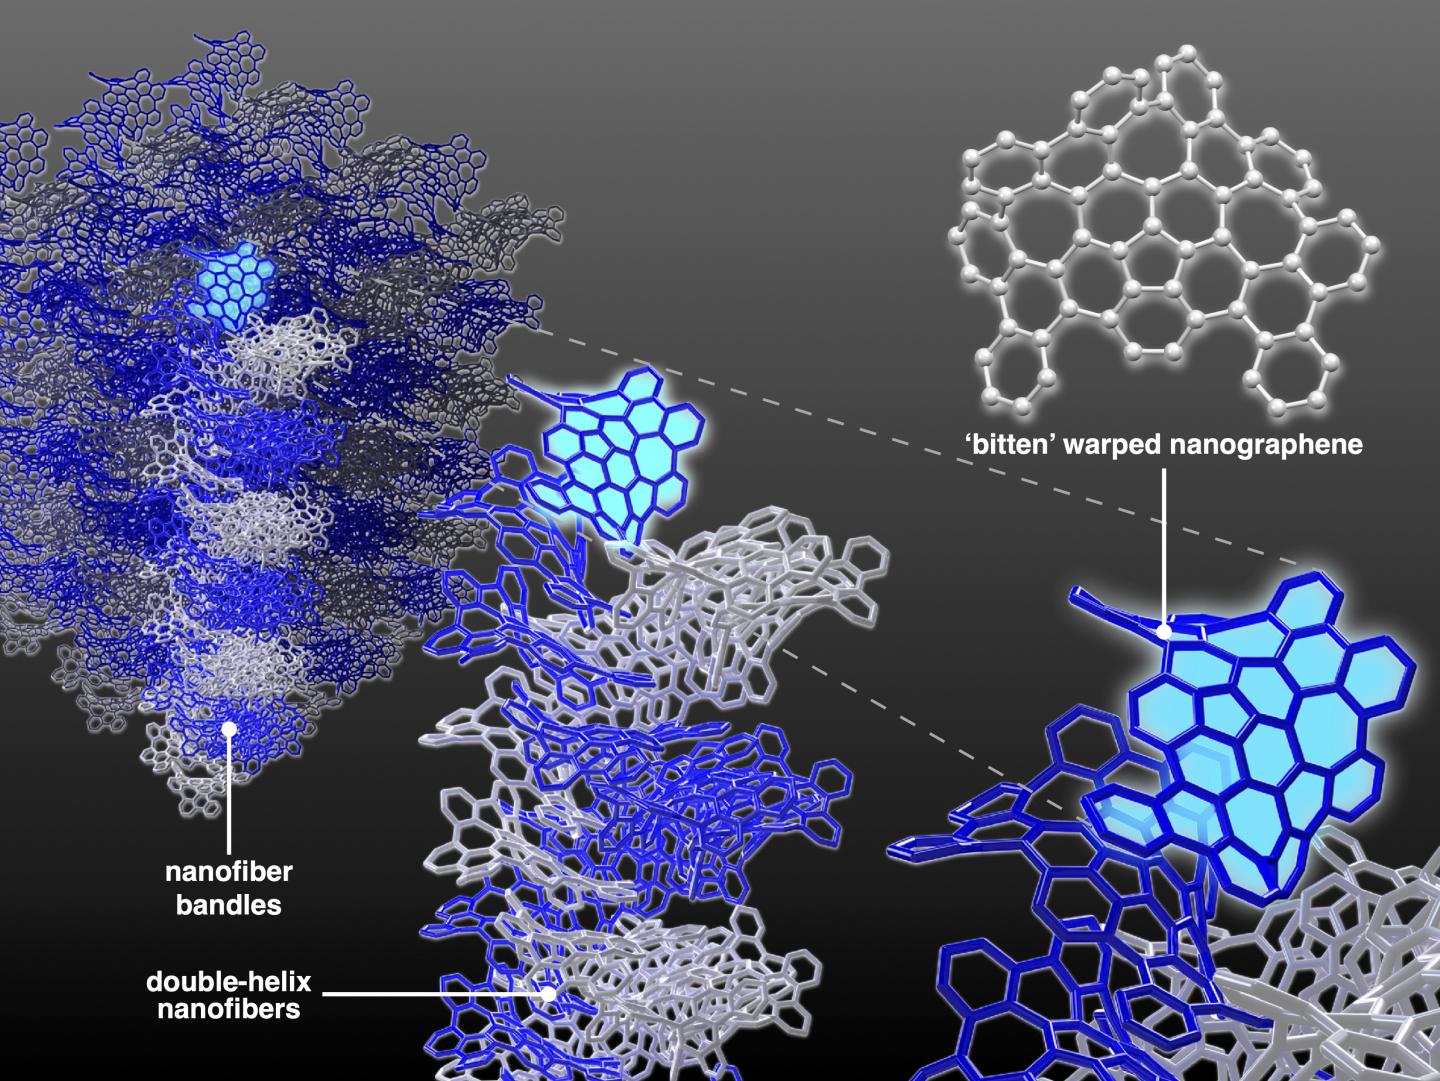 Schematic illustration of hierarchical structures of carbon nanofiber bundles made of bitten warped nanographene molecules